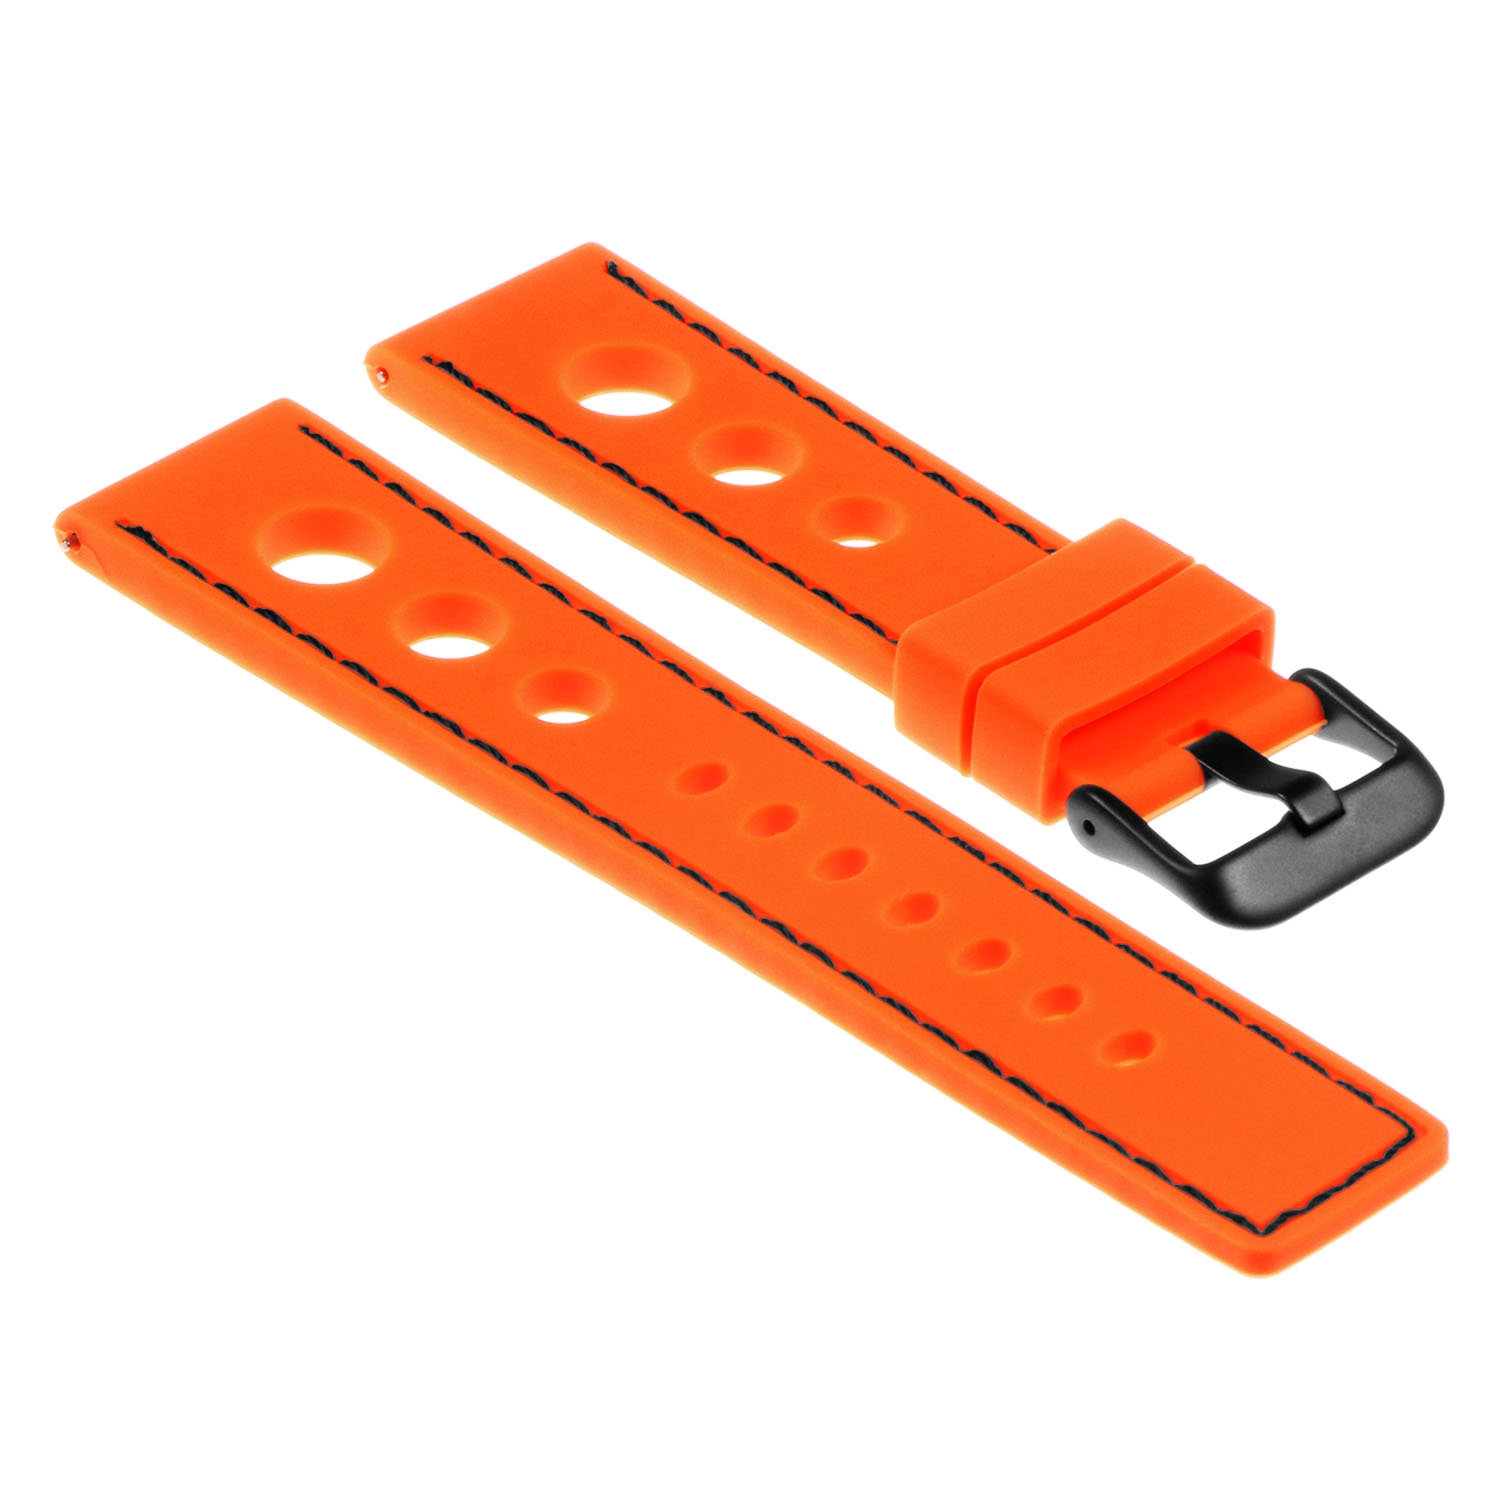 StrapsCo Silicone Rubber Rally Watch Band Strap for Samsung Gear S3 Frontier - Orange & Black